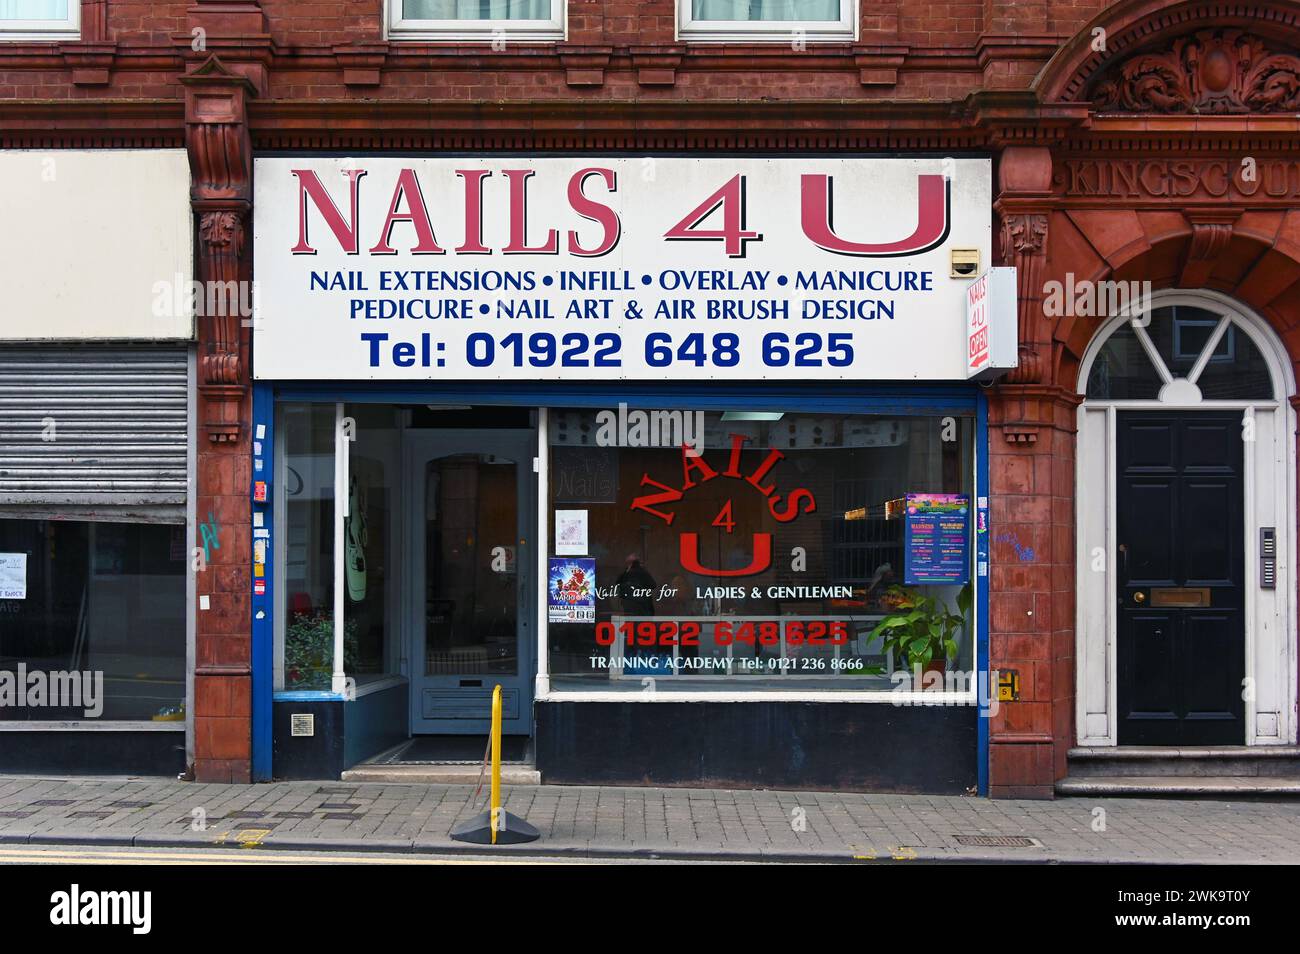 NAILS 4 U, nail salon. Bridge Street, Walsall, West Midlands, England, United Kingdom, Europe. Stock Photo